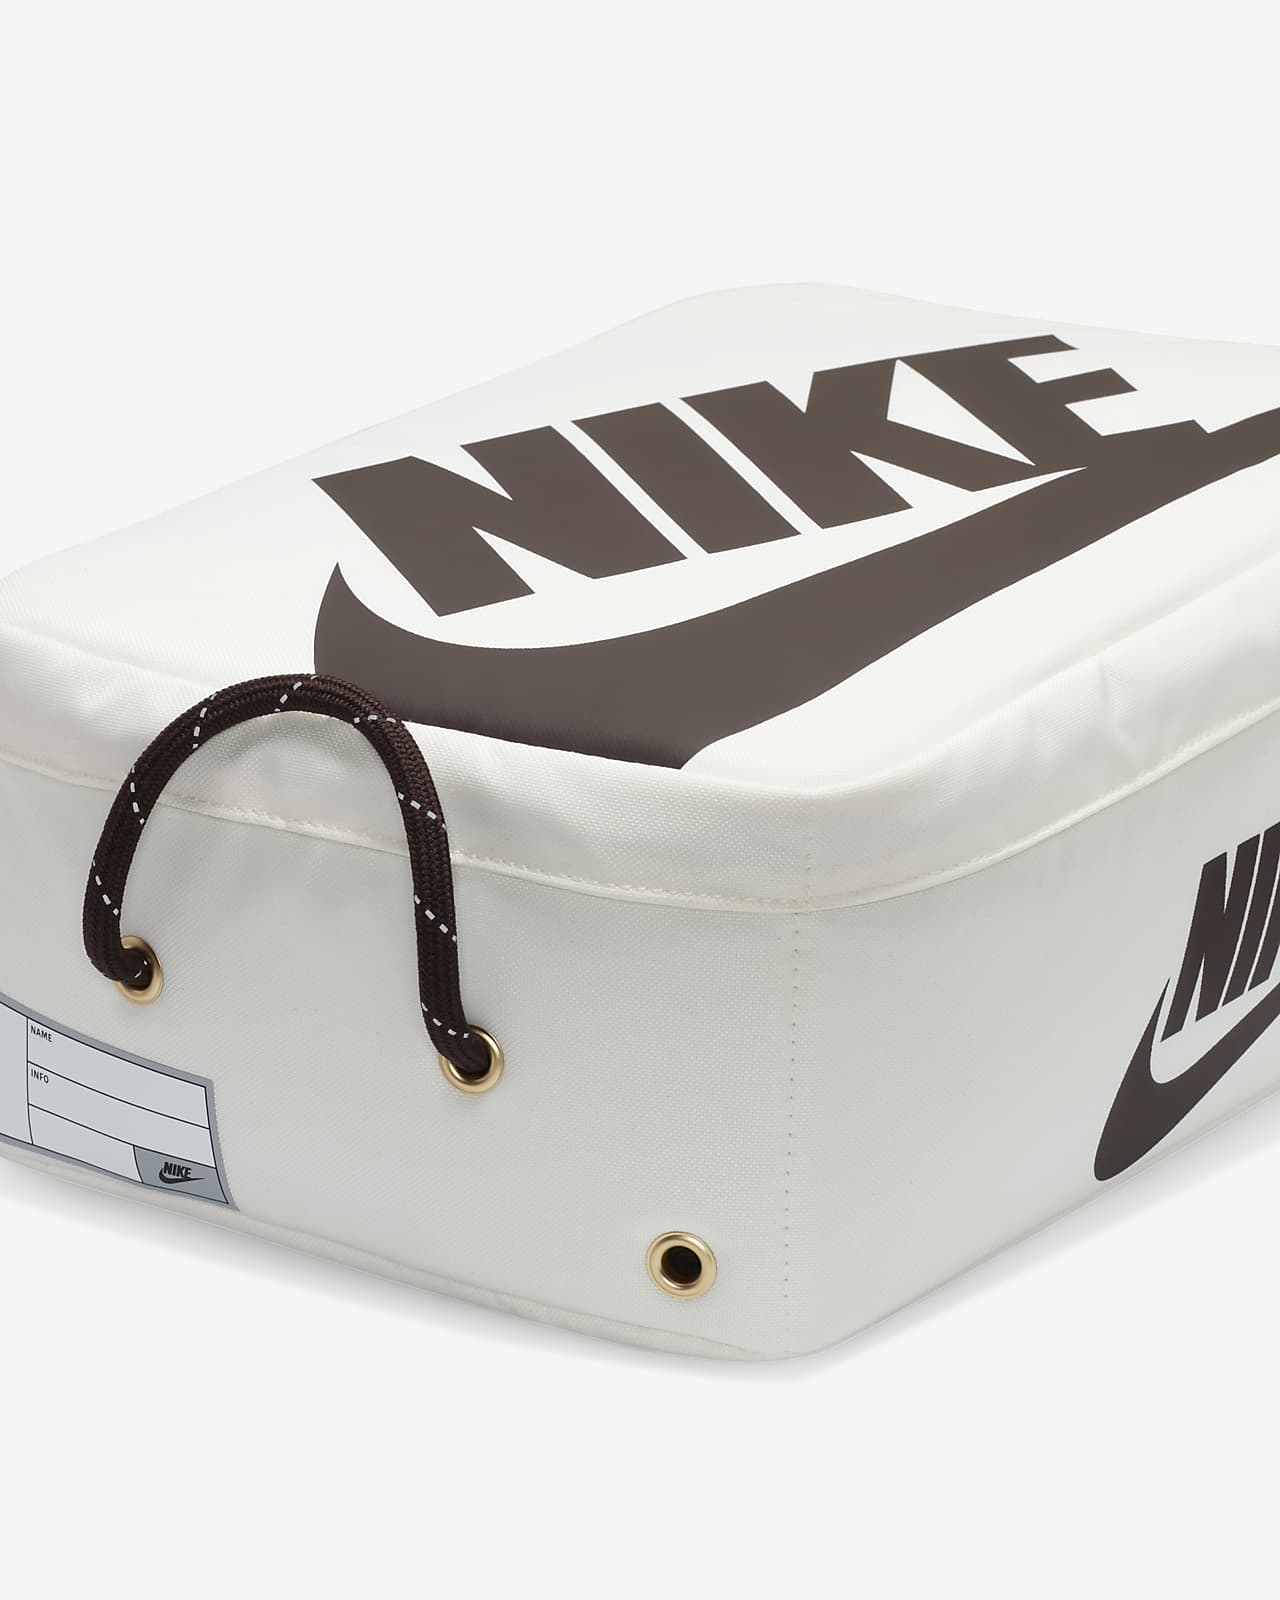 Nike travel shoe bag